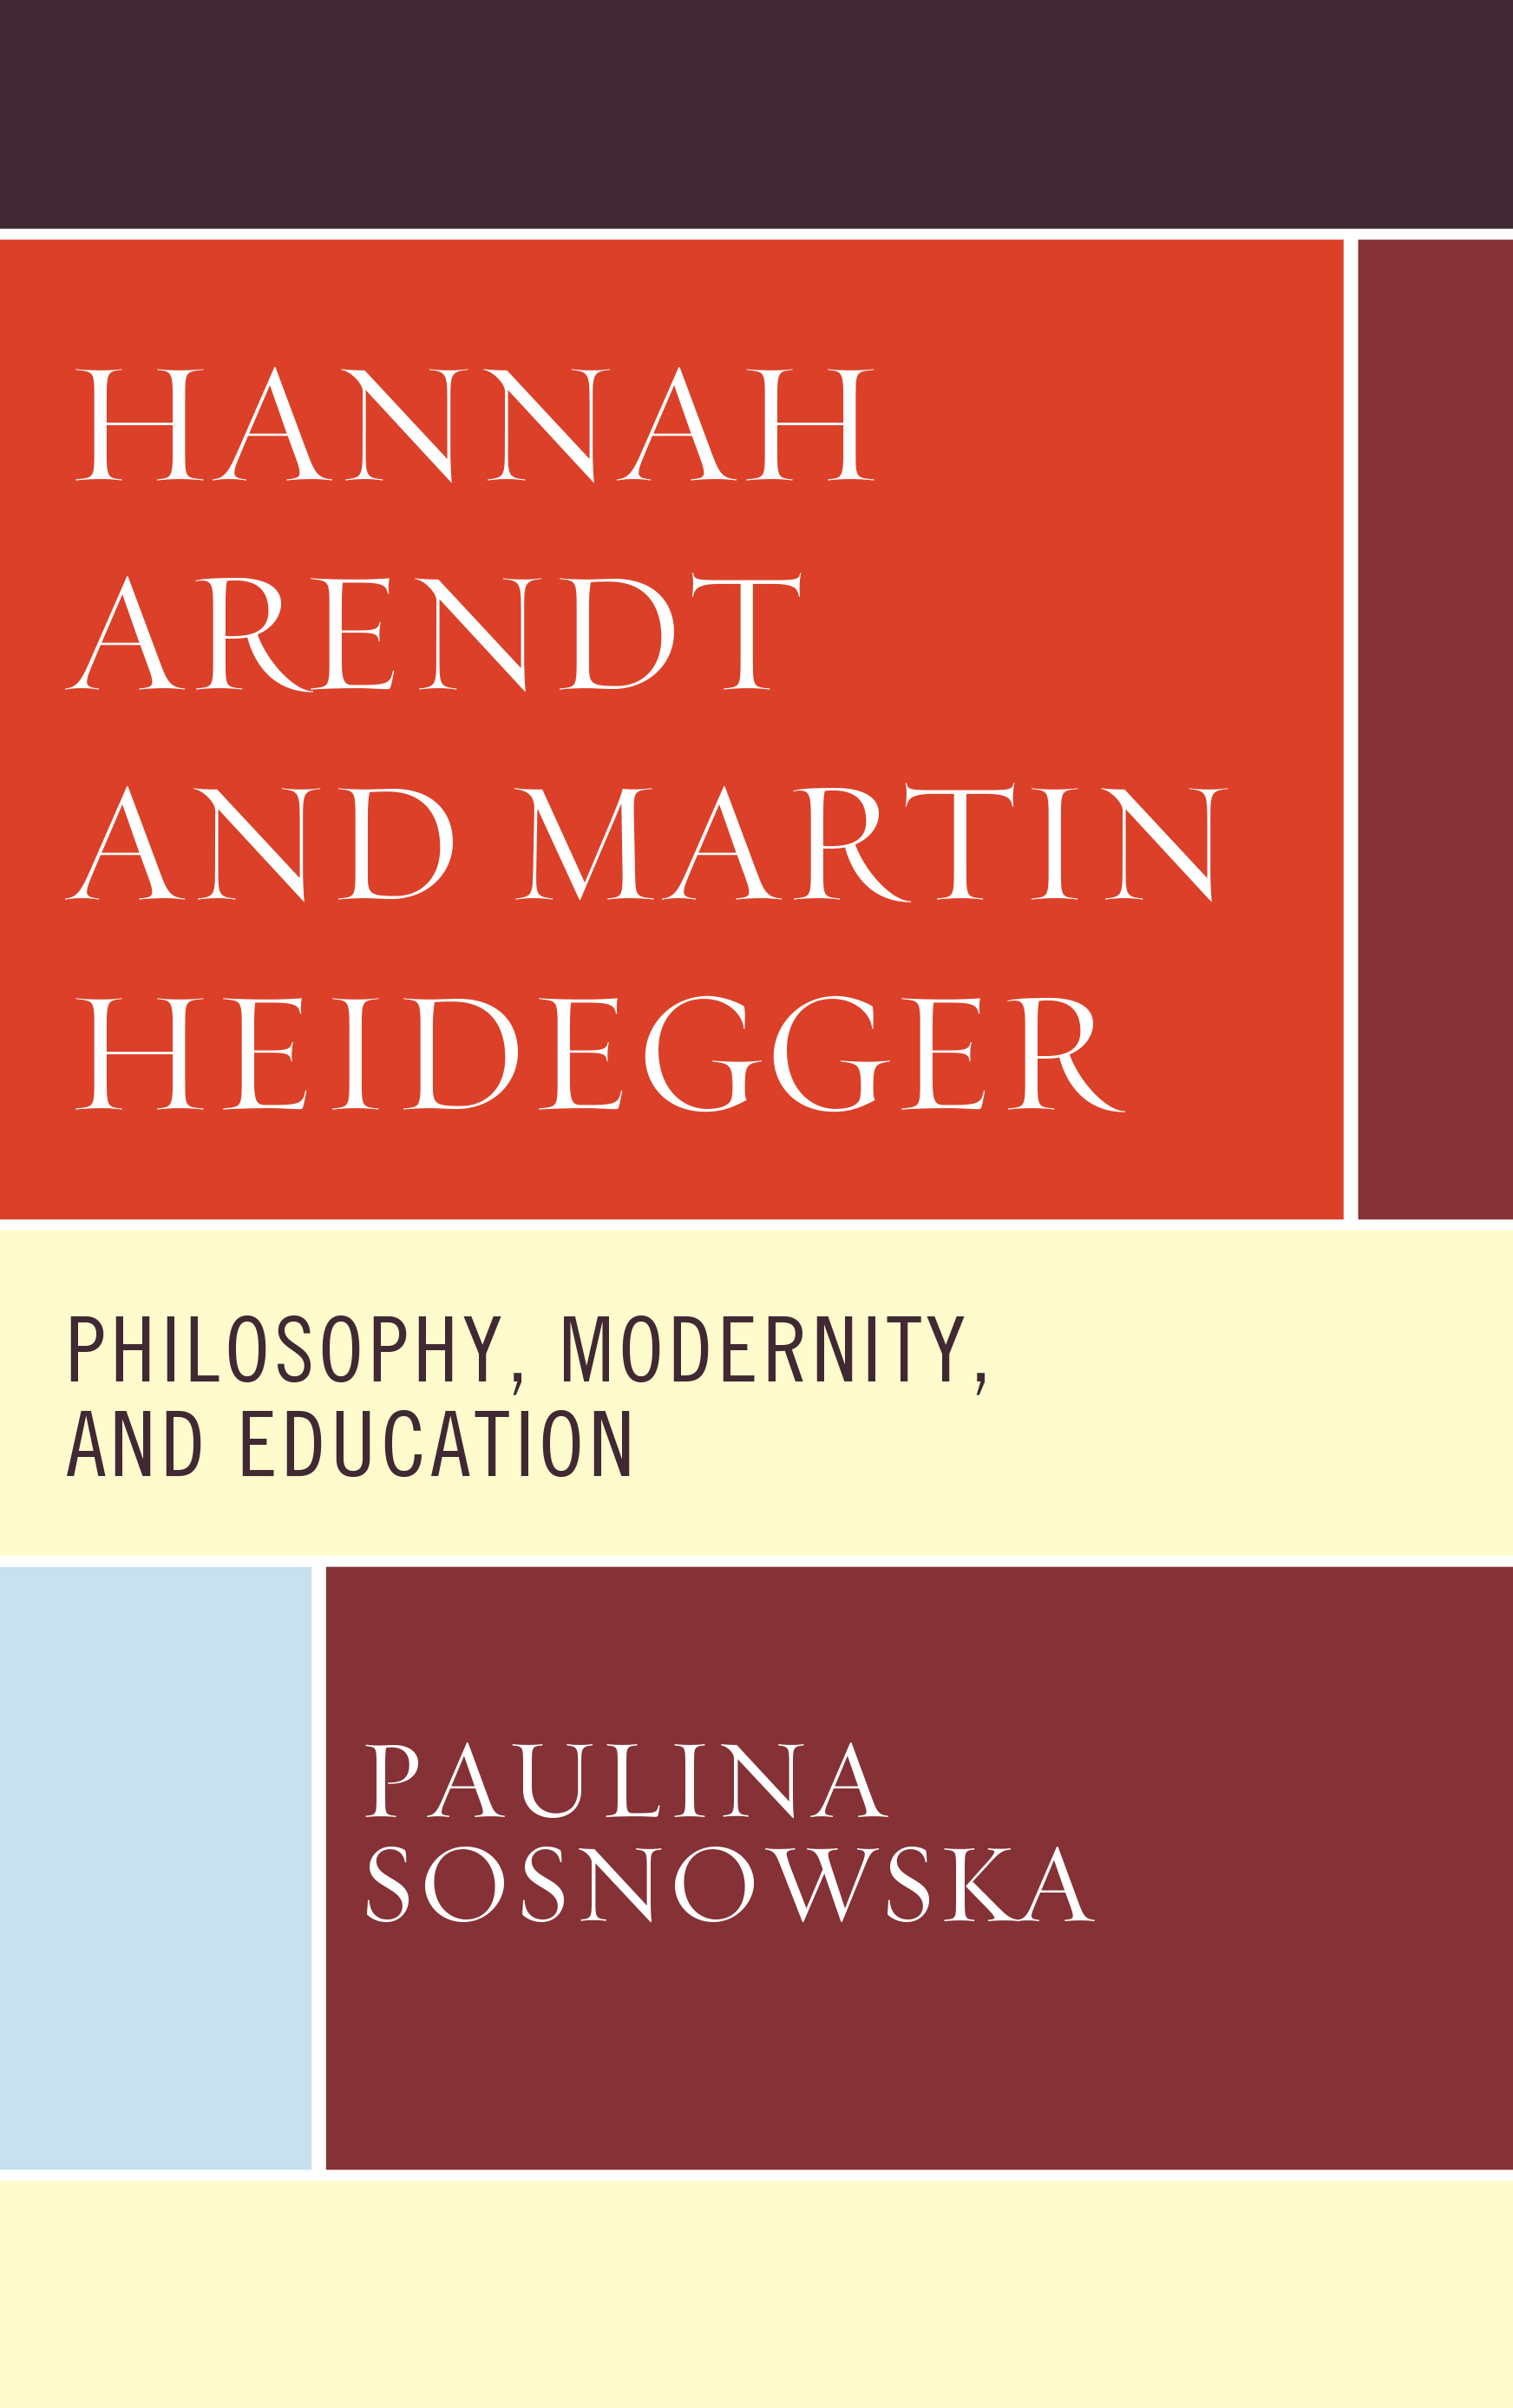 Hannah Arendt and Martin Heidegger: Philosophy, Modernity, and Education